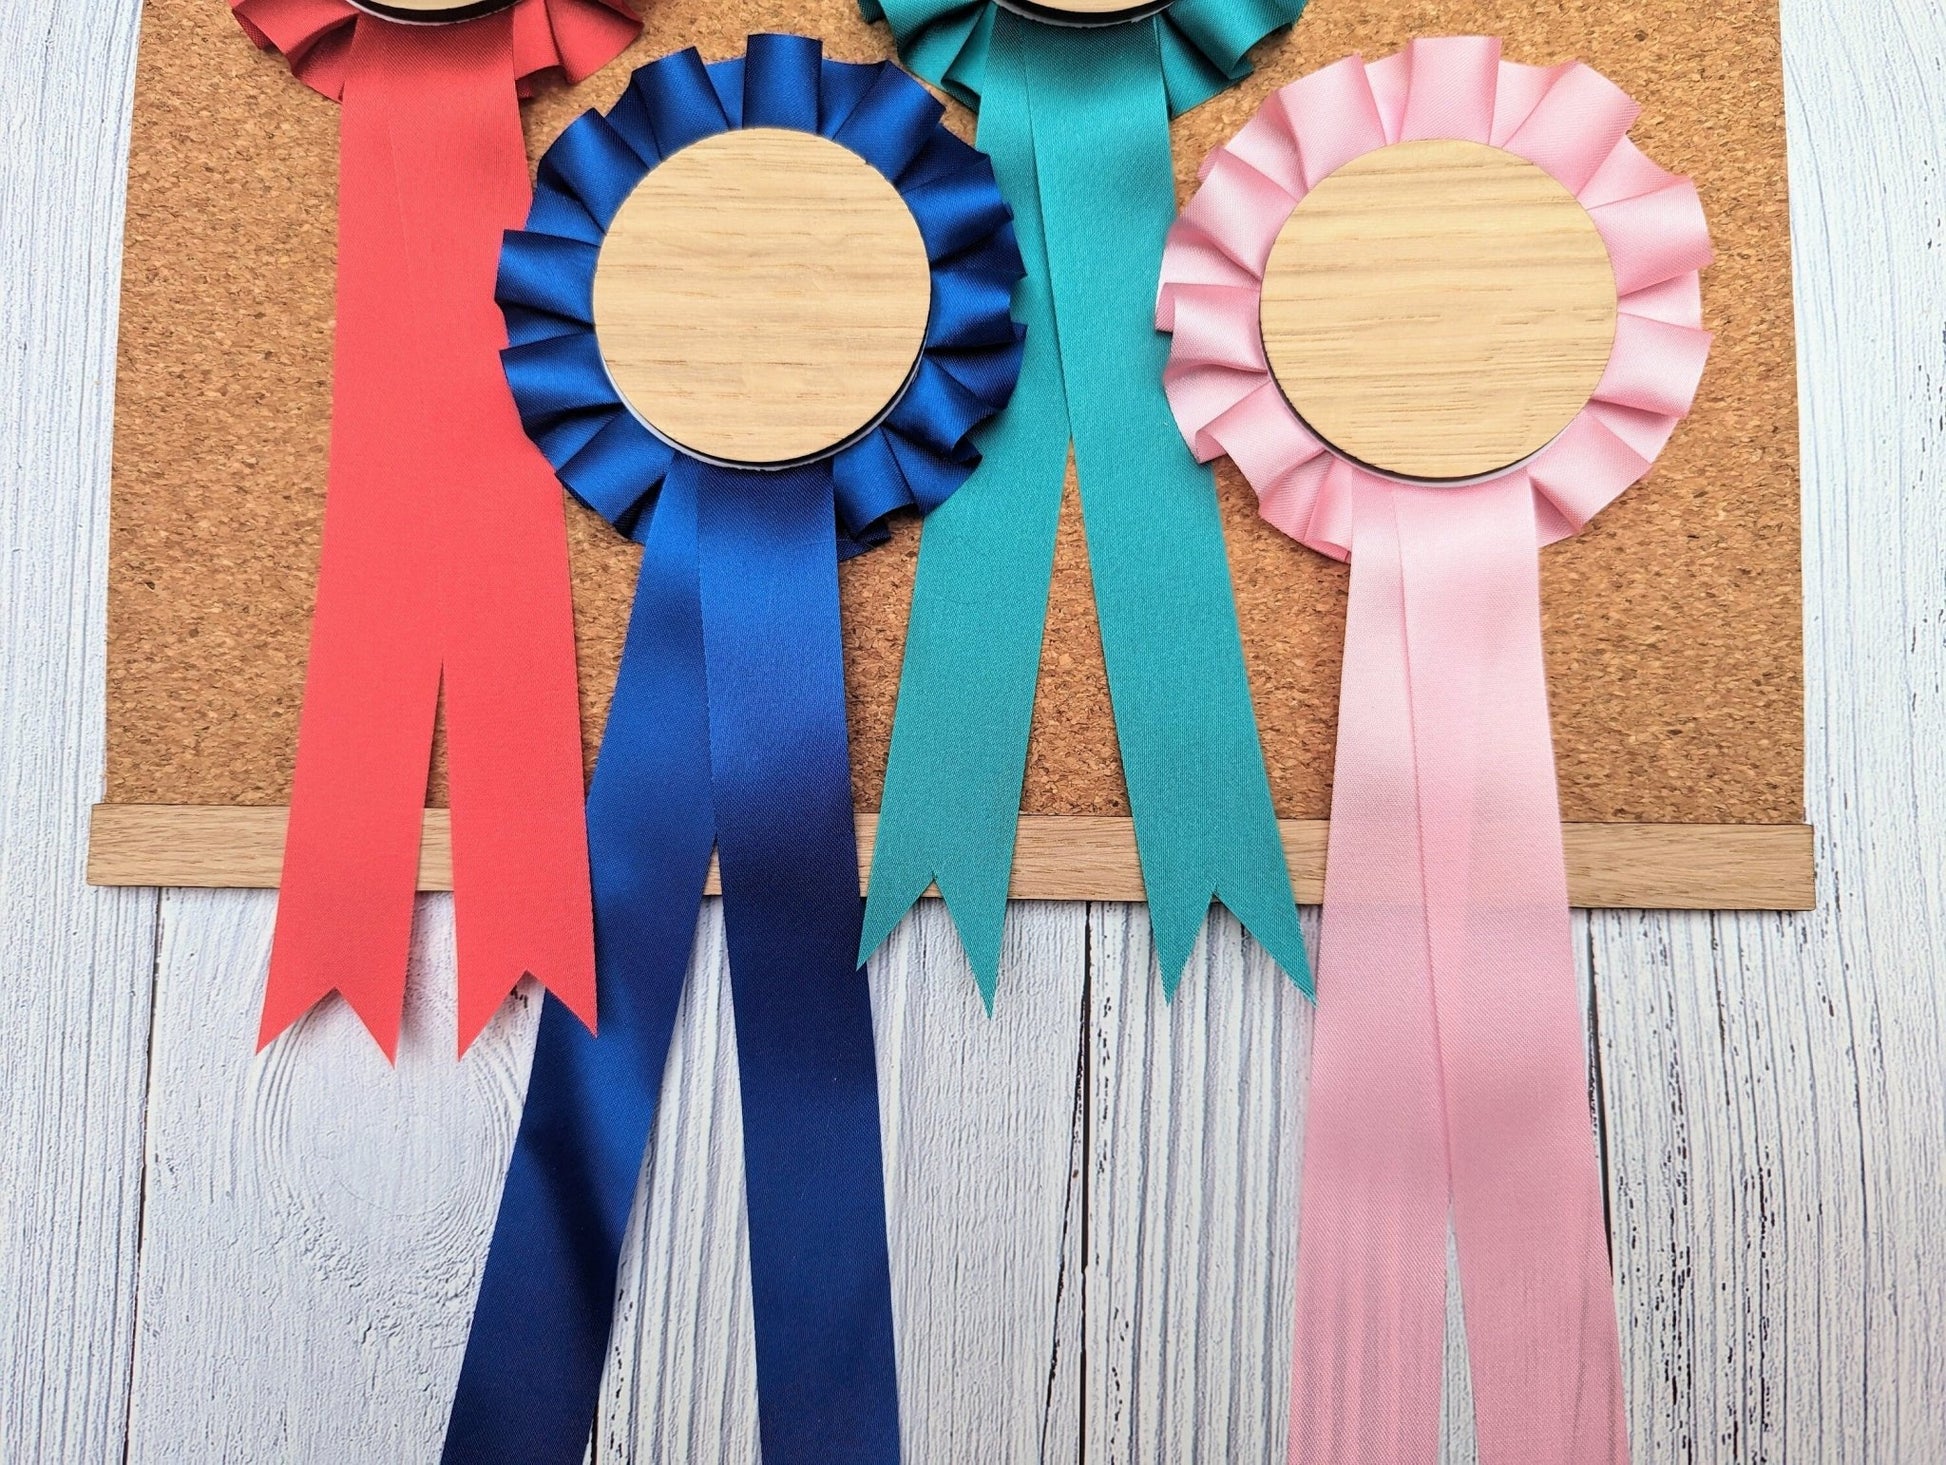 Personalised Pomeranian Rosette Holder - Custom Dog Show Award Display - Handcrafted Wooden Keepsake for Pet Lovers - CherryGroveCraft